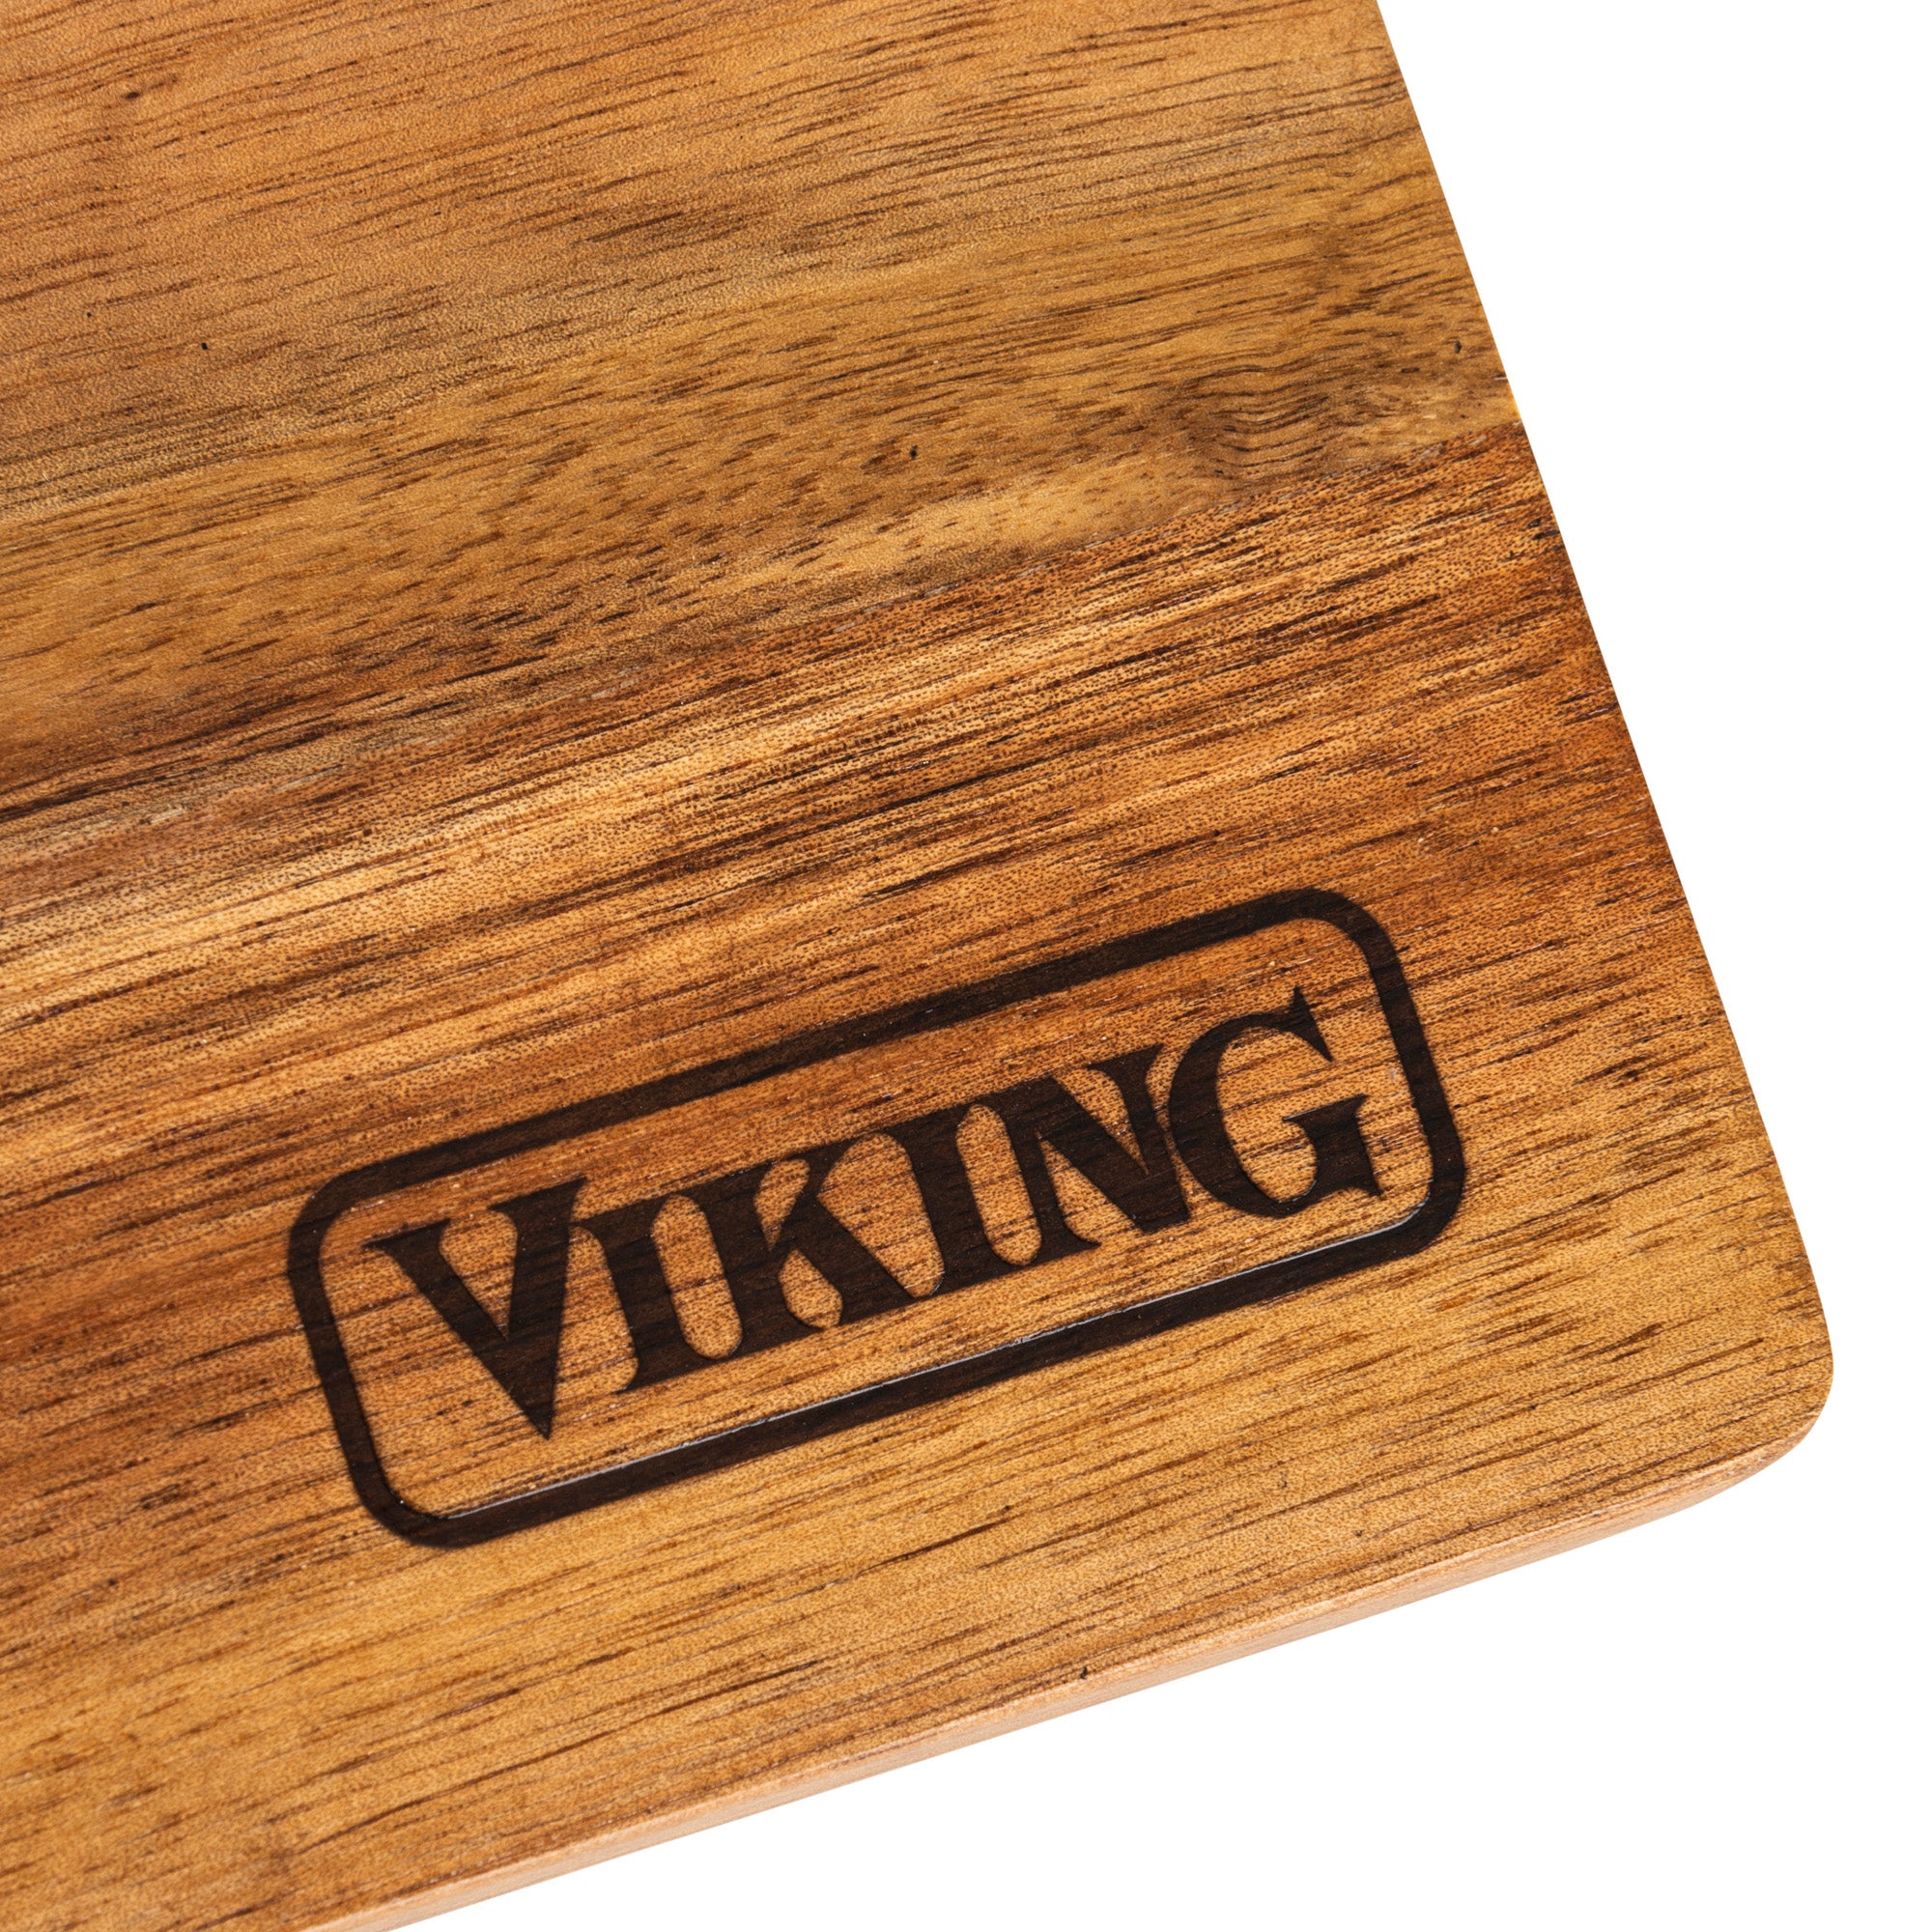 Viking Acacia 2-Piece Paddle and Cutting Board Serving Set